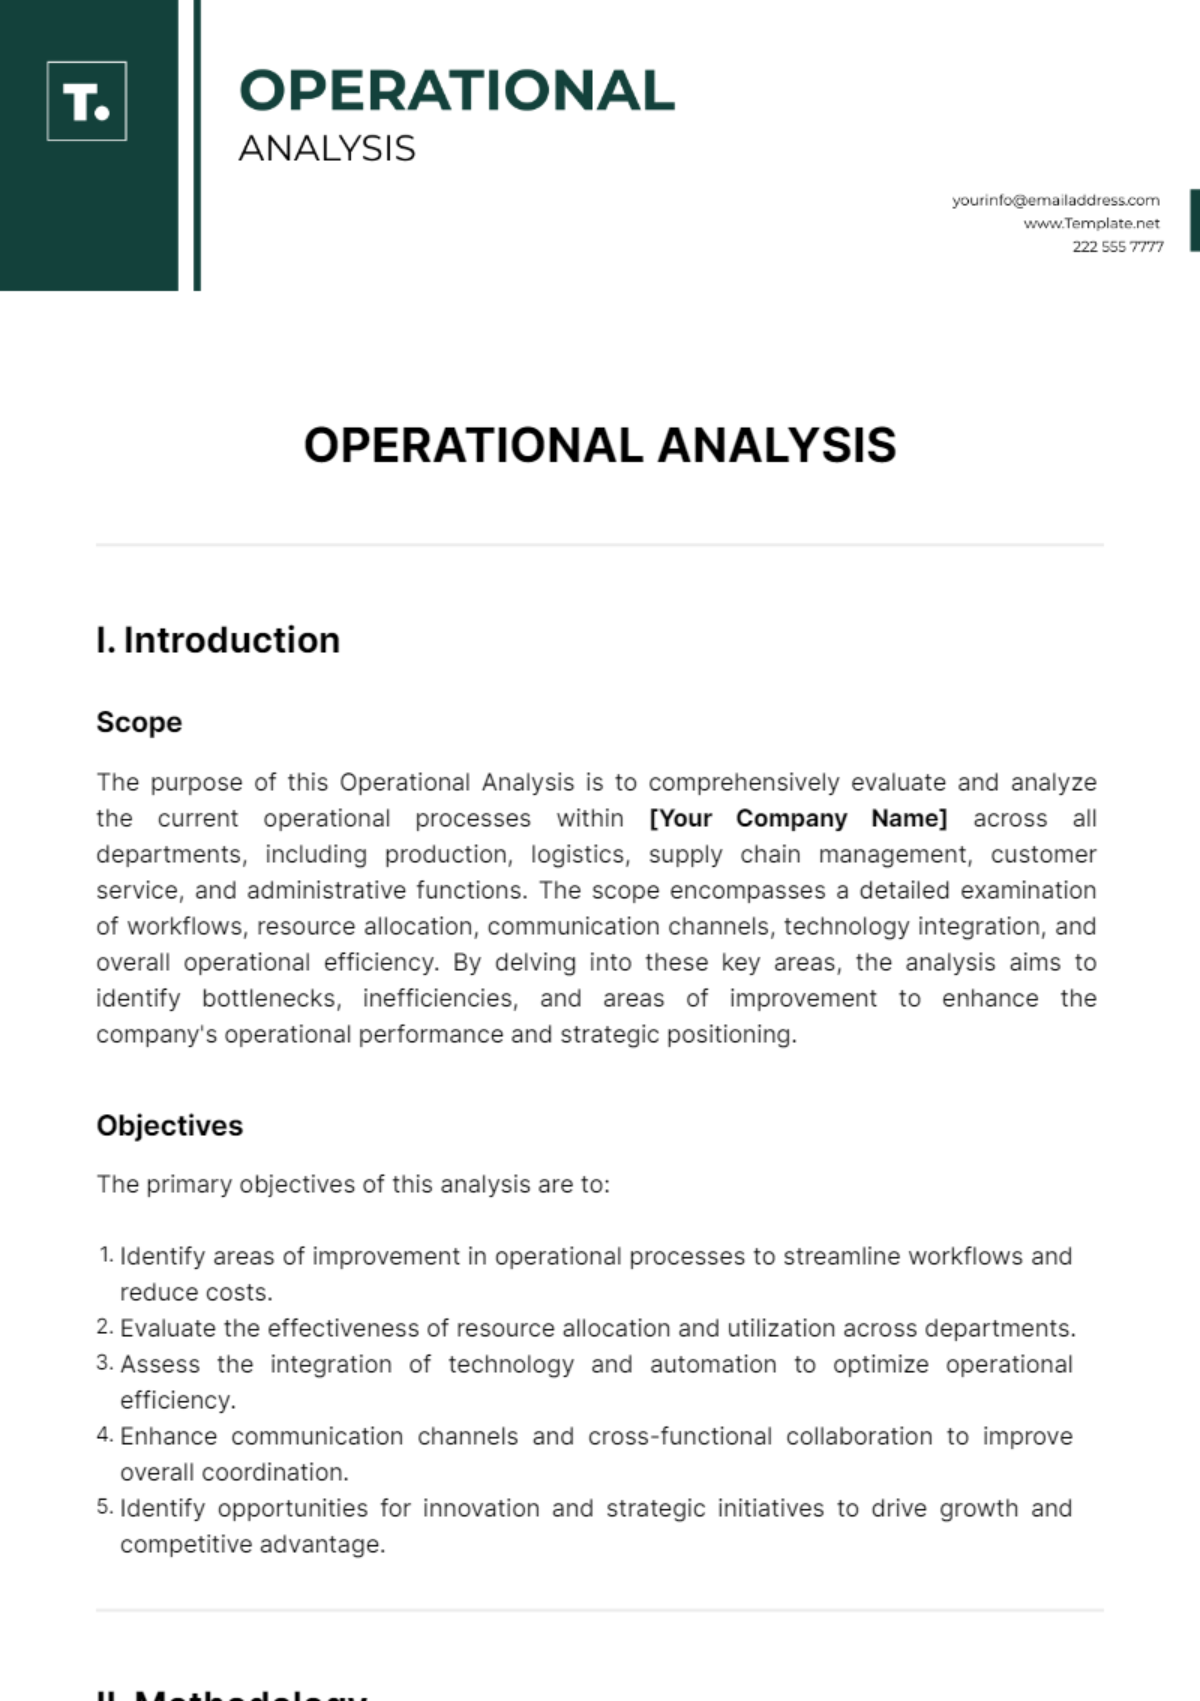 Operational Analysis Template